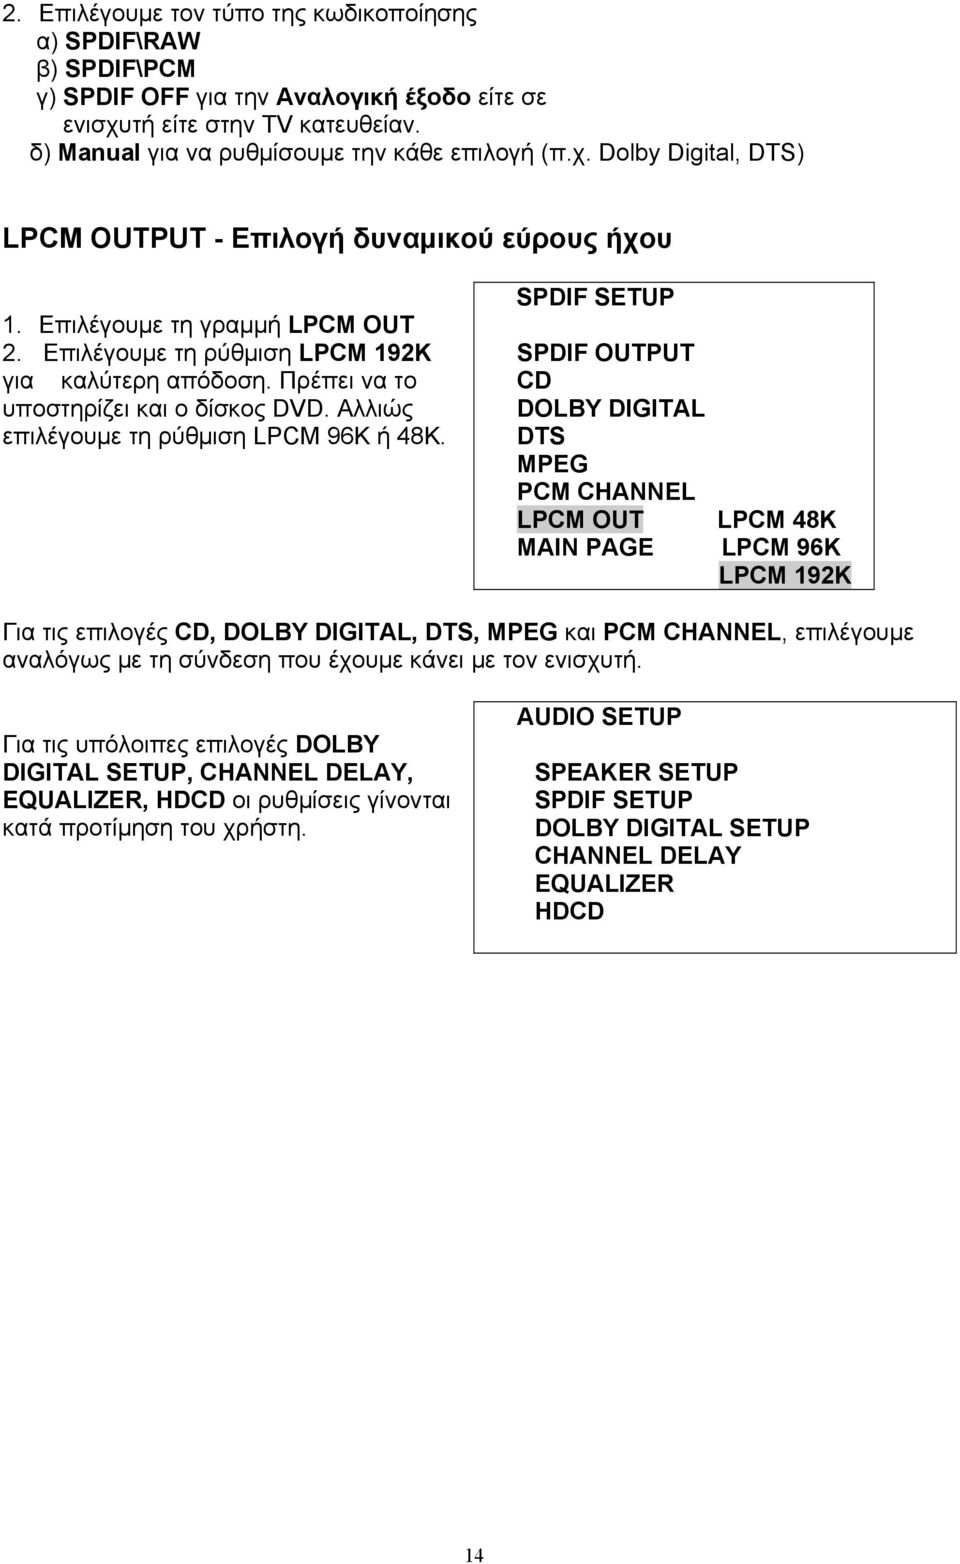 SPDIF SETUP SPDIF OUTPUT CD DOLBY DIGITAL DTS MPEG PCM CHANNEL LPCM OUT MAIN PAGE LPCM 48K LPCM 96K LPCM 192K Για τις επιλογές CD, DOLBY DIGITAL, DTS, MPEG και PCM CHANNEL, επιλέγουμε αναλόγως με τη